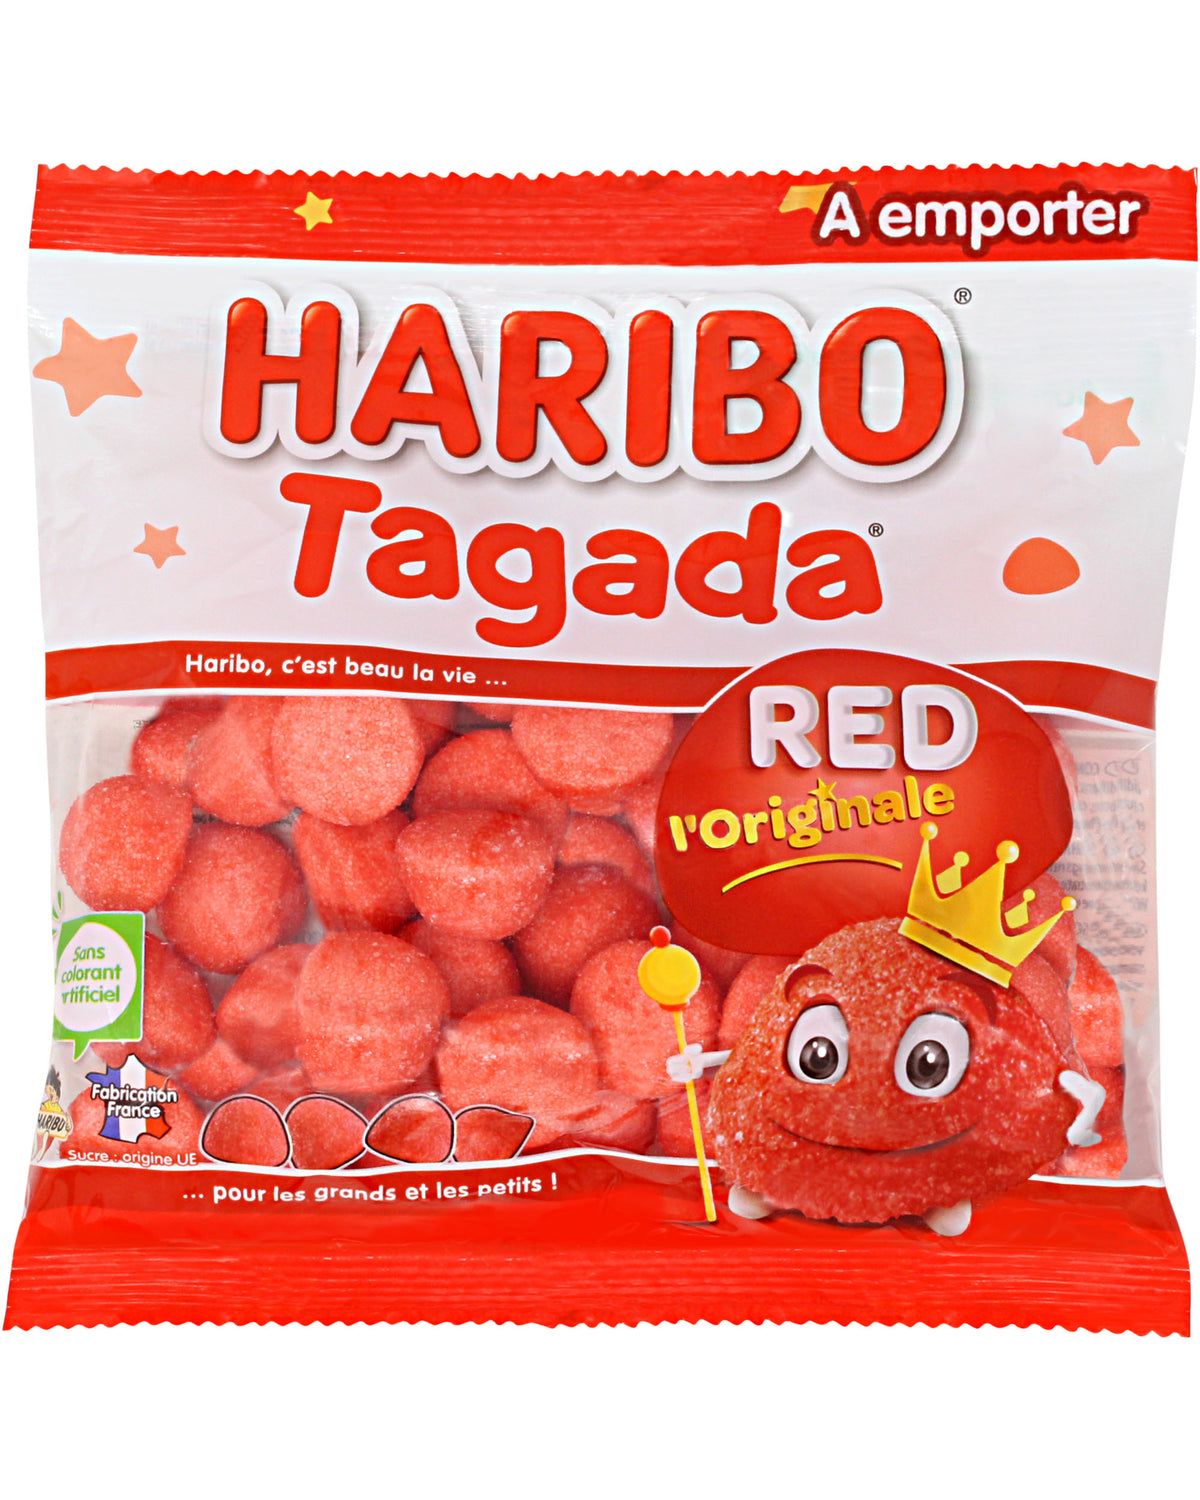 Haribo Tagada Strawberry Candy aka Fraises Tagada - The Gourmet Corner